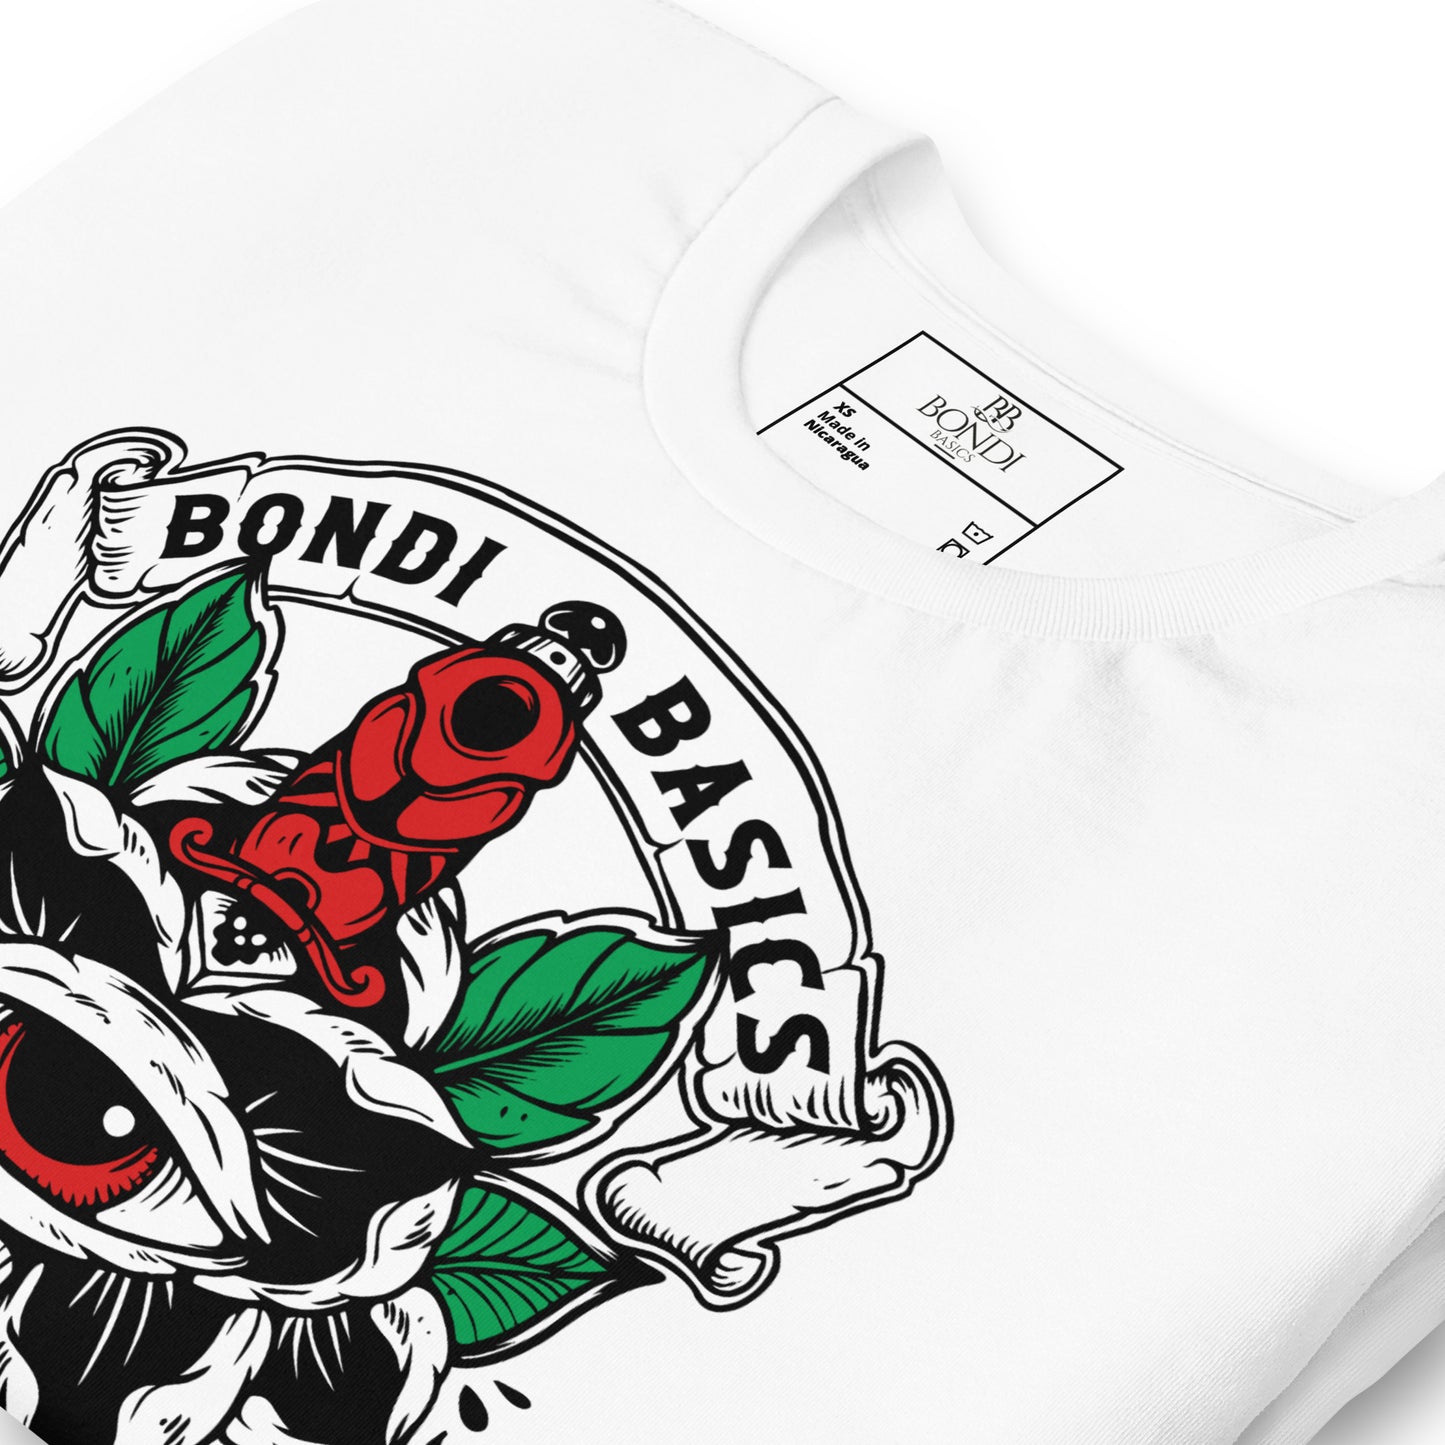 Bondi Basics White Mens urban clothing tshirt with Evil eye Design top